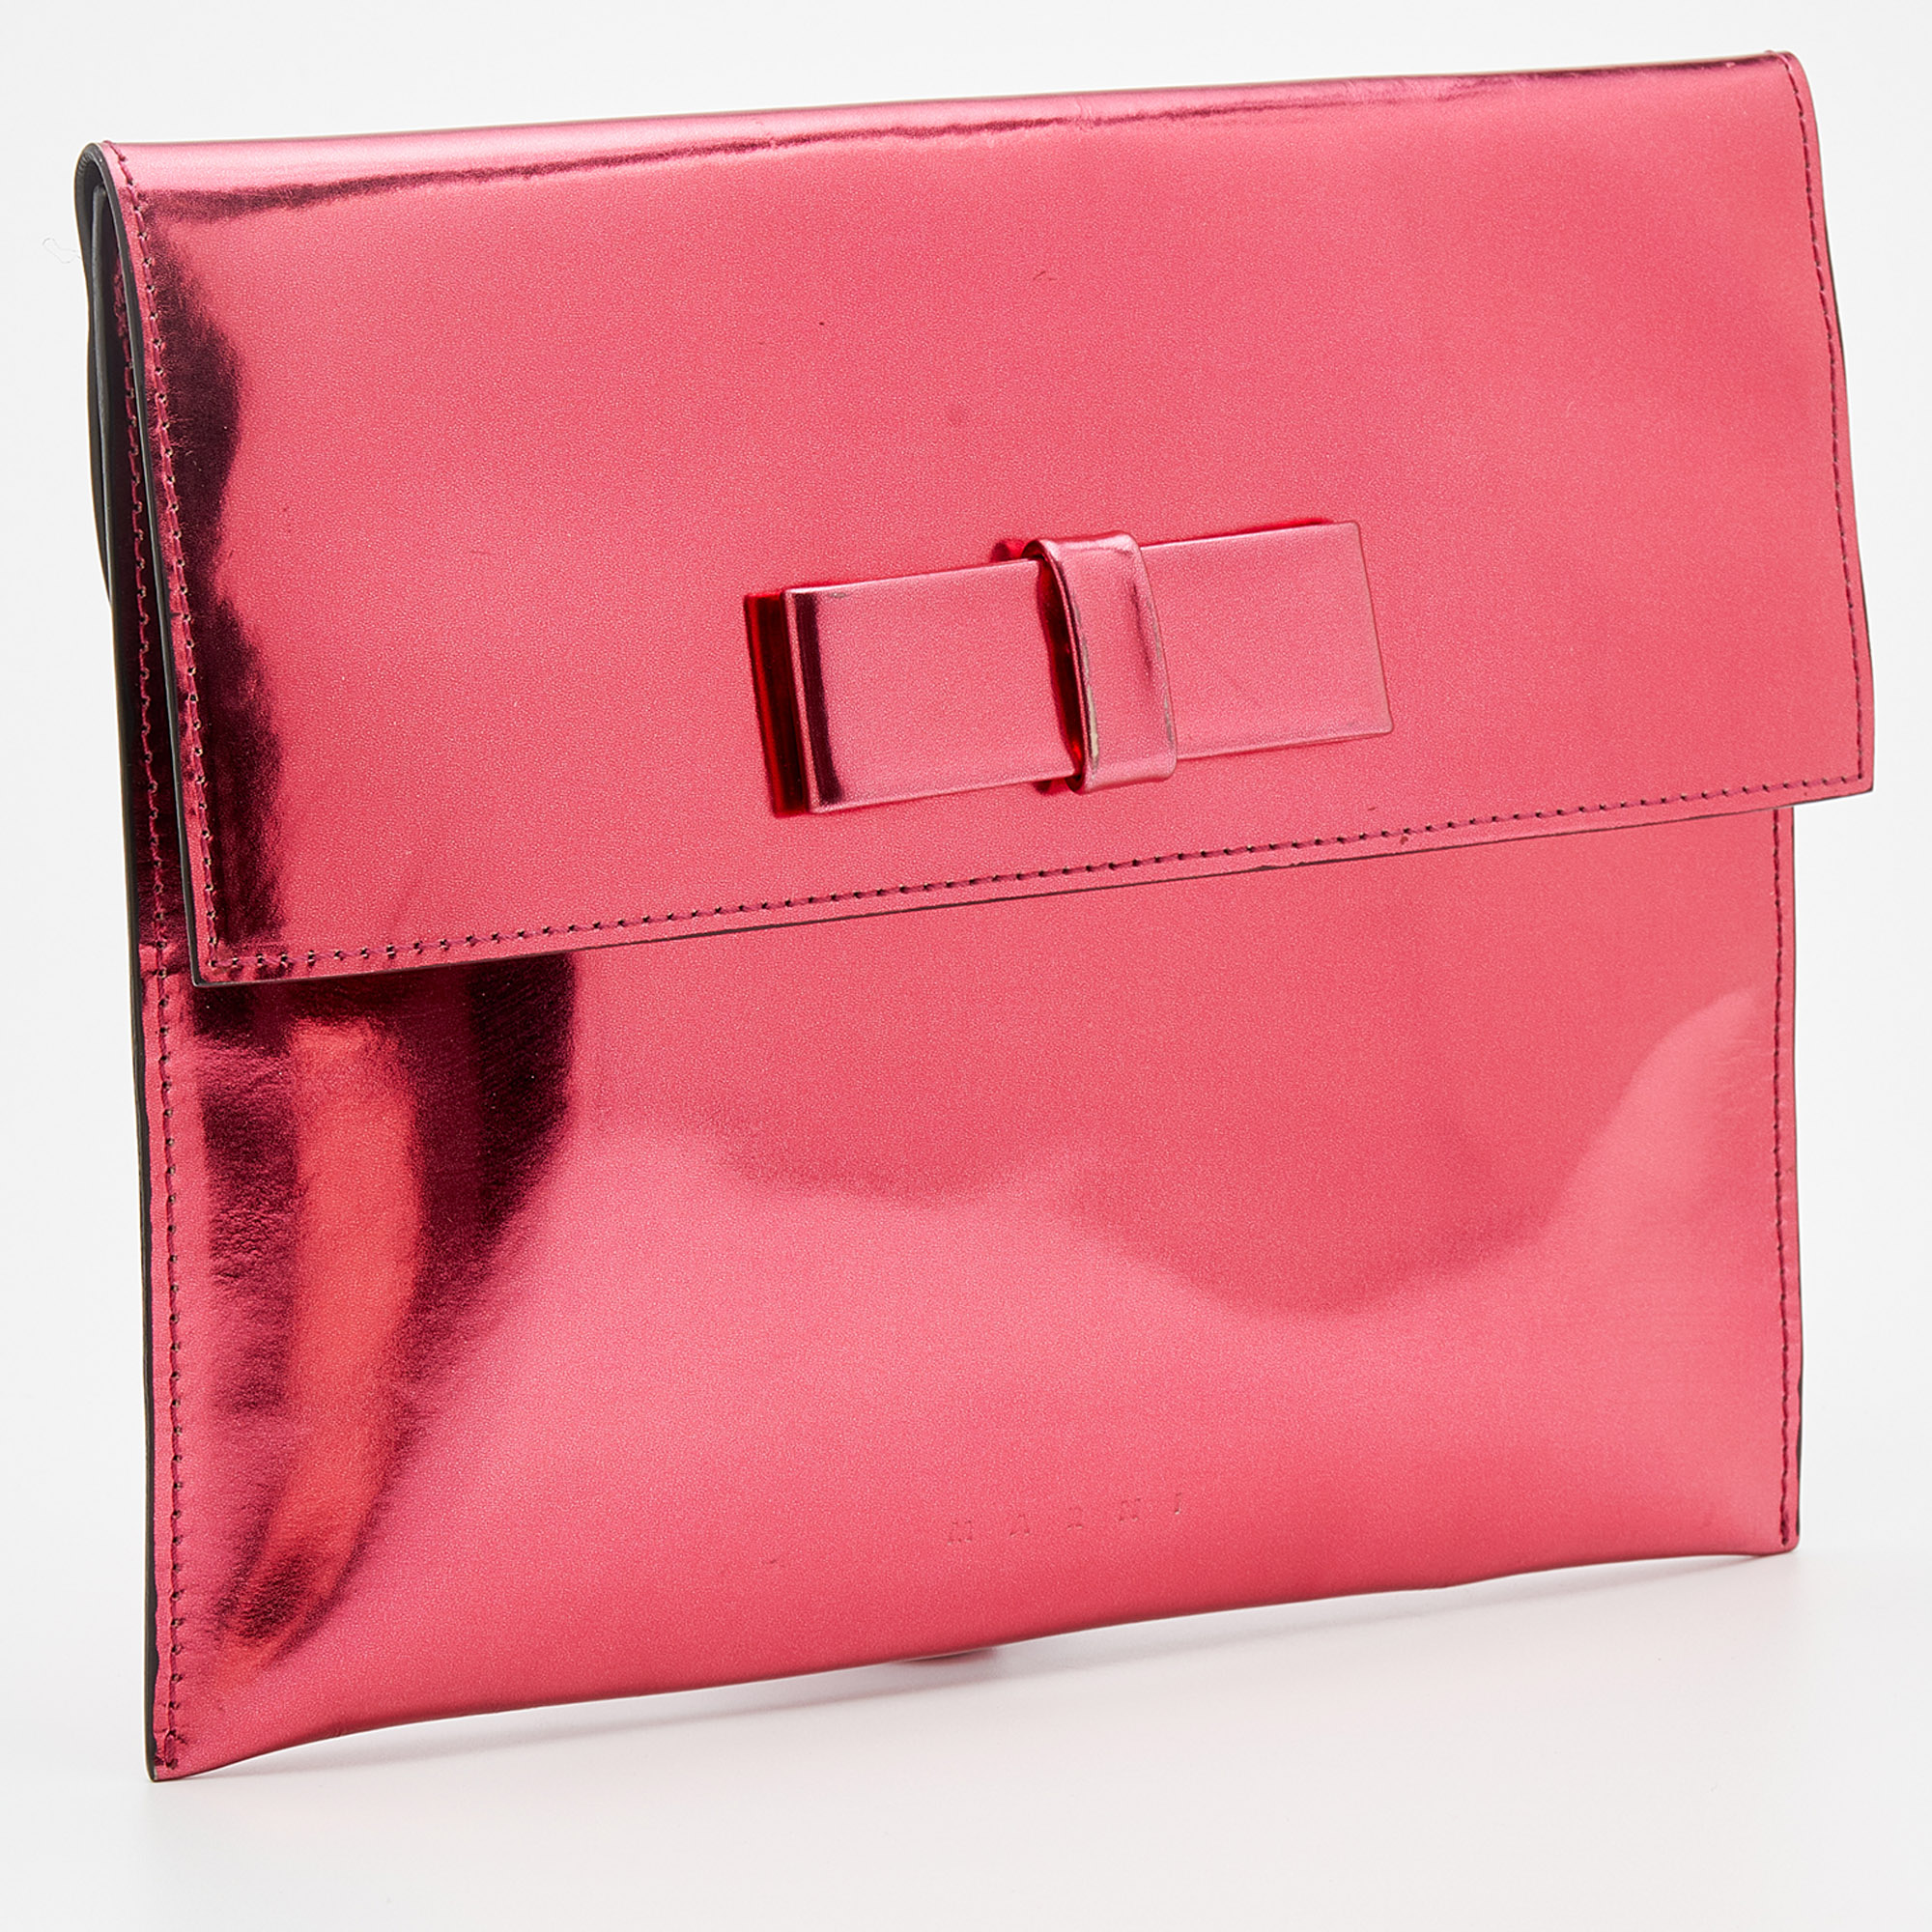 Marni Metallic Pink Patent Leather Bow Clutch